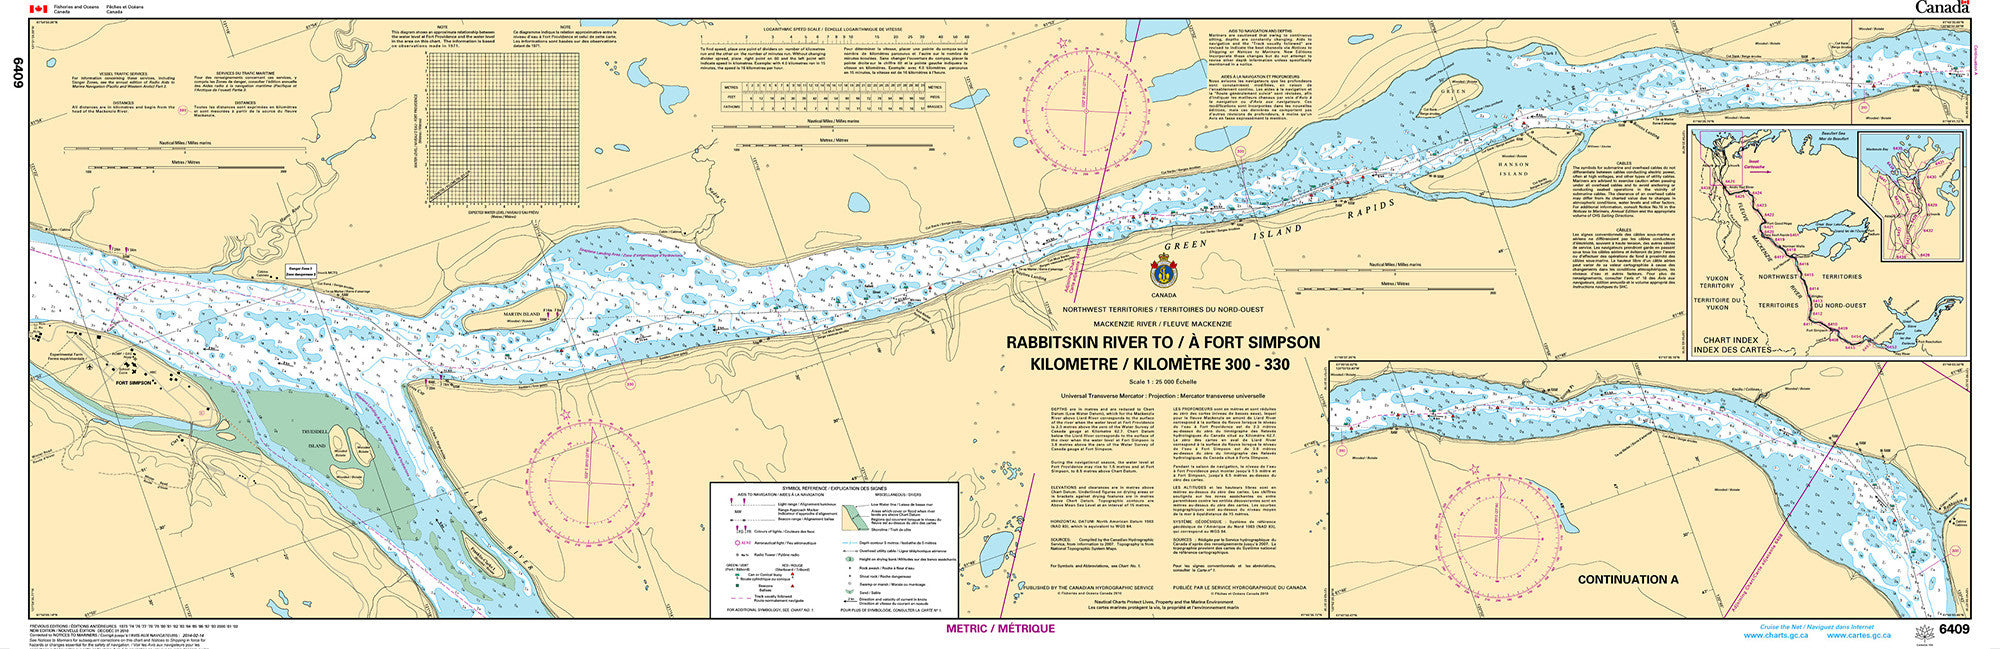 Canadian Hydrographic Service Nautical Chart CHS6409: Rabbitskin River to/à Fort Simpson Kilometre 300 / Kilomètre 330